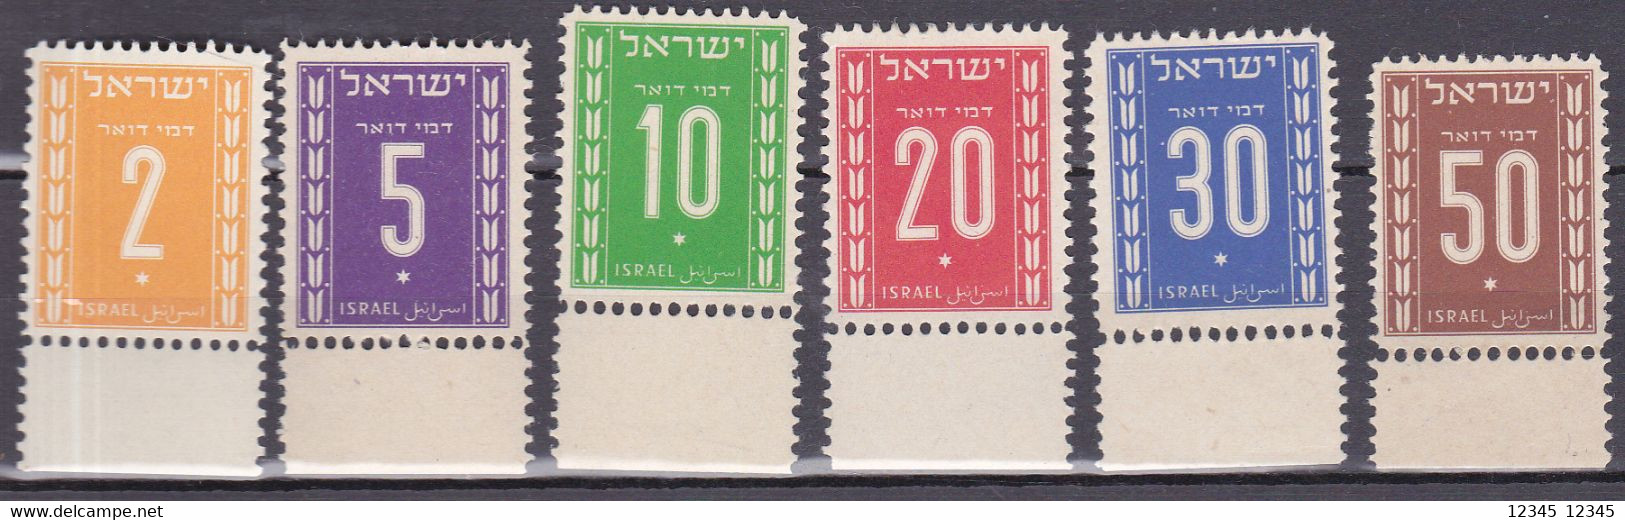 Israël 1949, Postfris MNH, Port (20=MH) - Postage Due